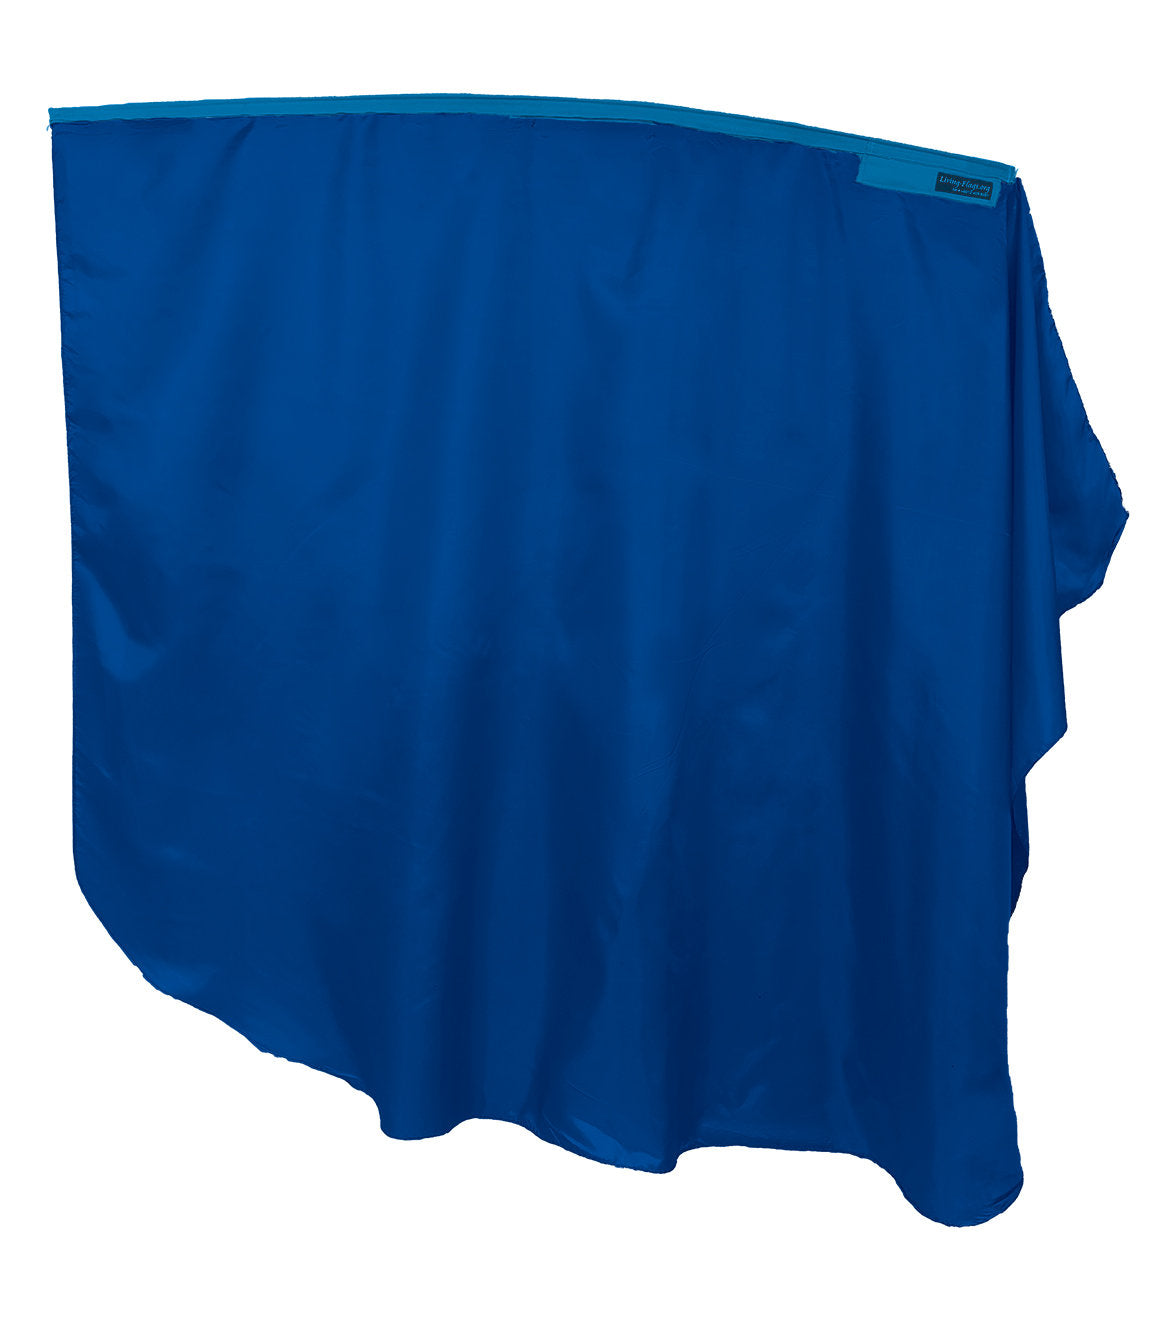 Harbotai Synthetic Silk - Tonos de Blue Angelic Wing Flag